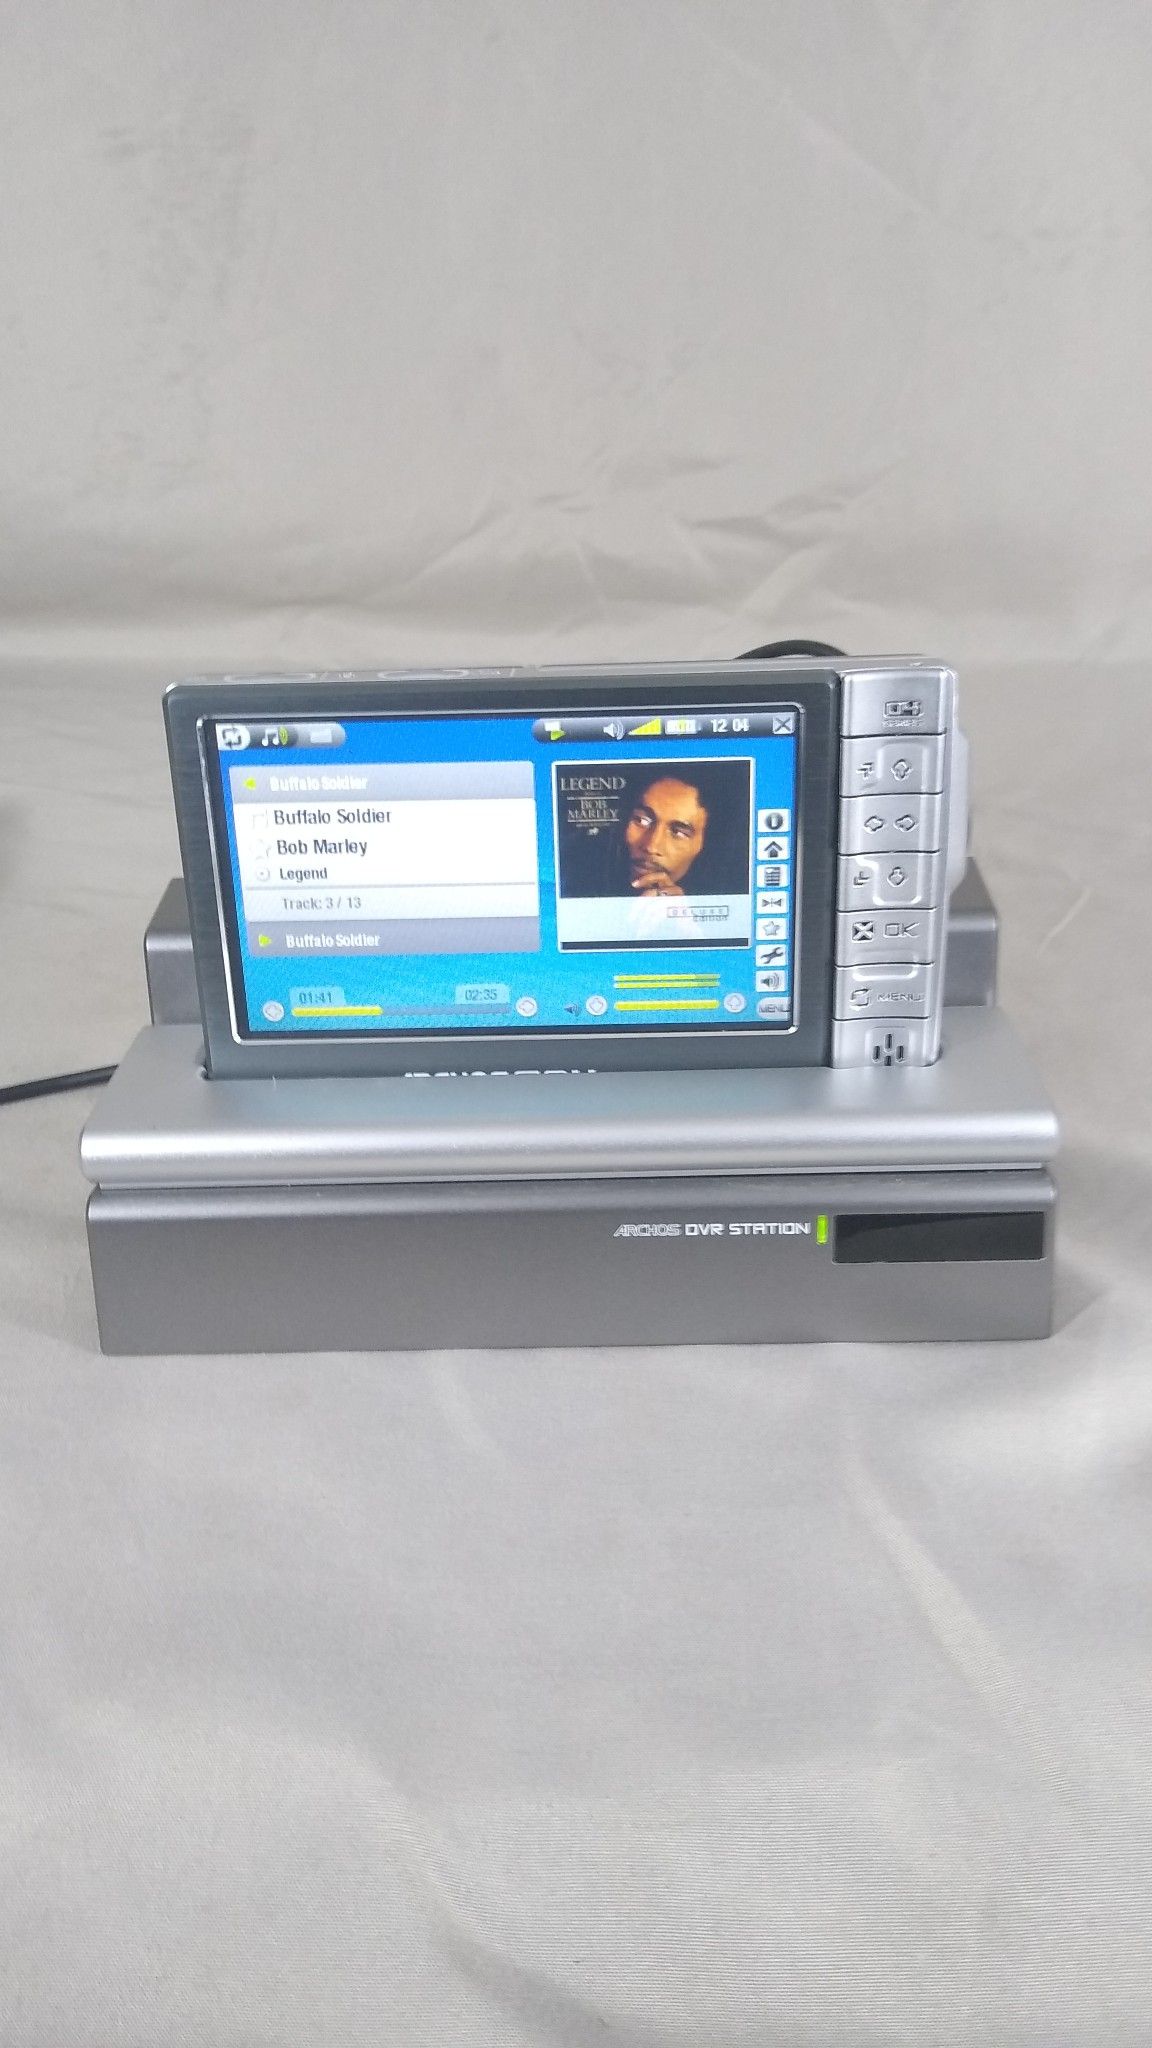 Archos 604 - 30GB 42618 Slim Portable Multimedia Player with DVR Station 42000